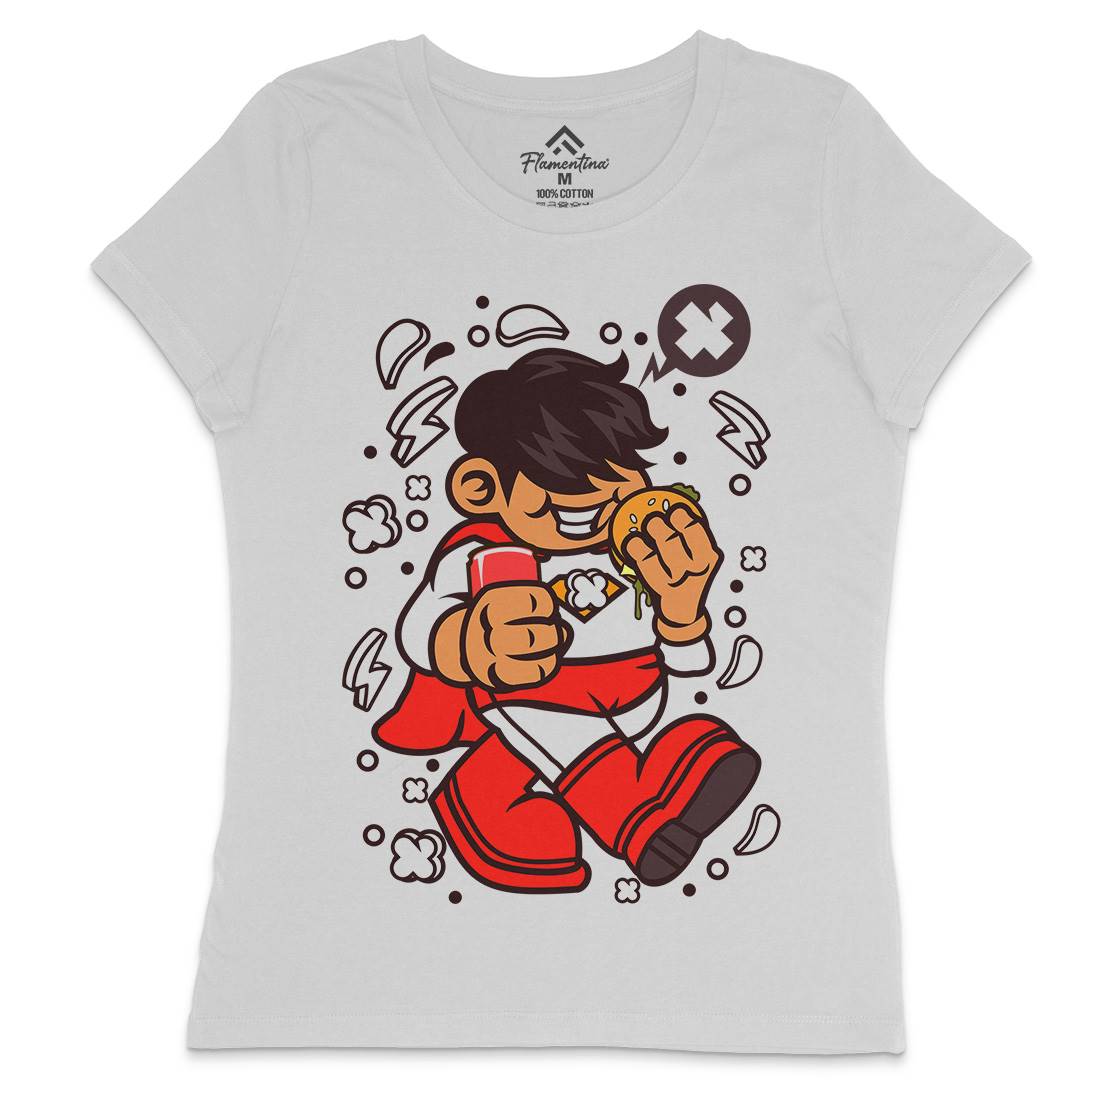 Superhero Super Kid Womens Crew Neck T-Shirt Geek C267